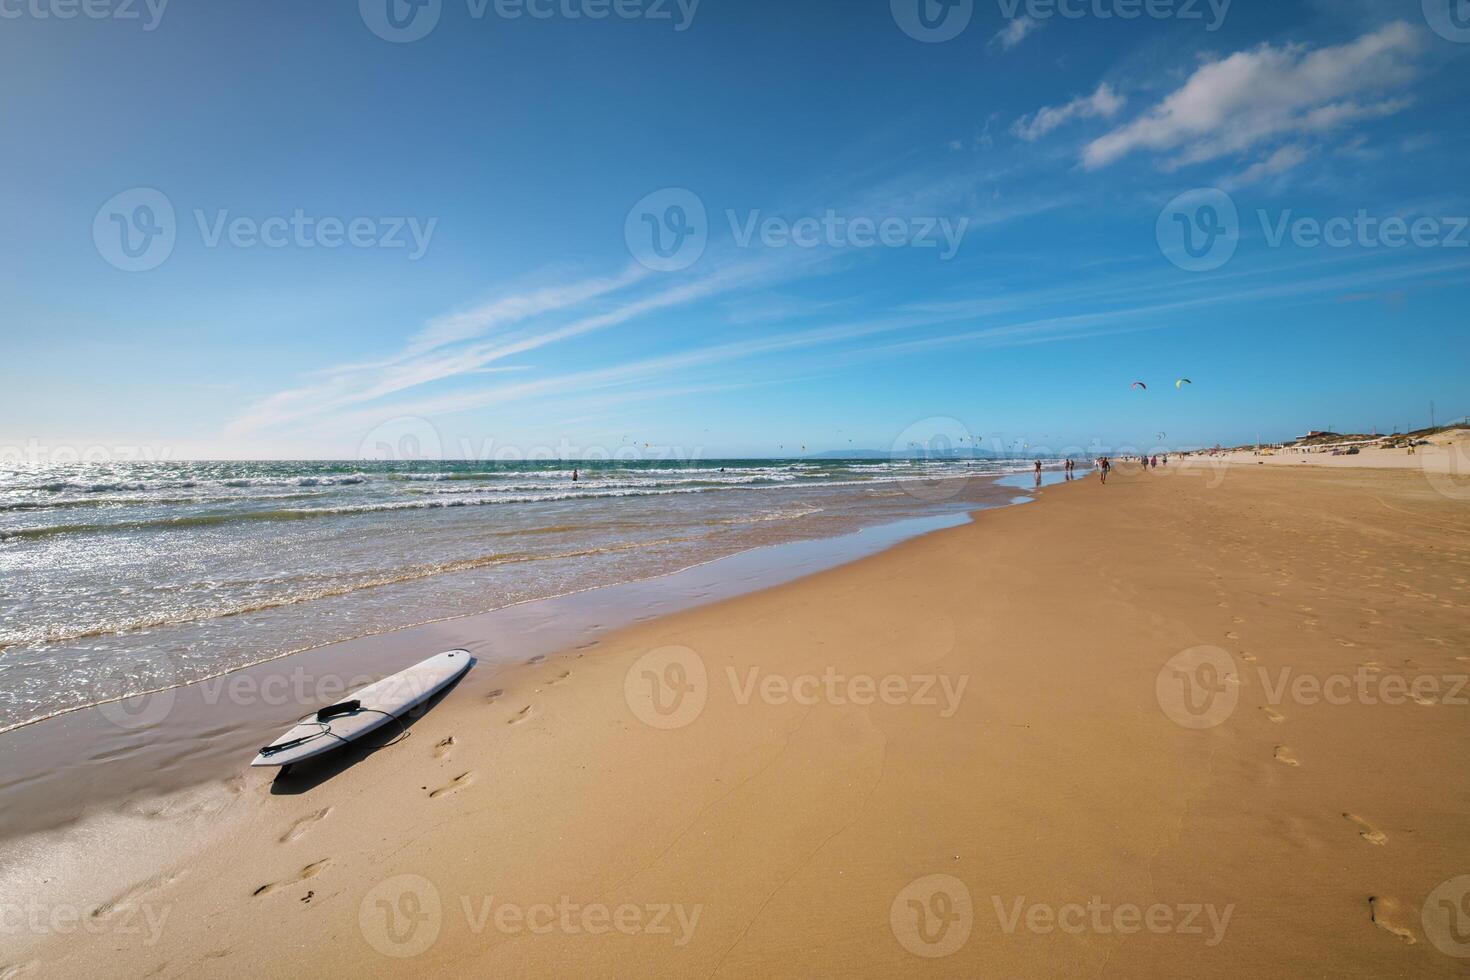 atlanten hav strand på fonte da Telha strand, costa da caparica, portugal foto